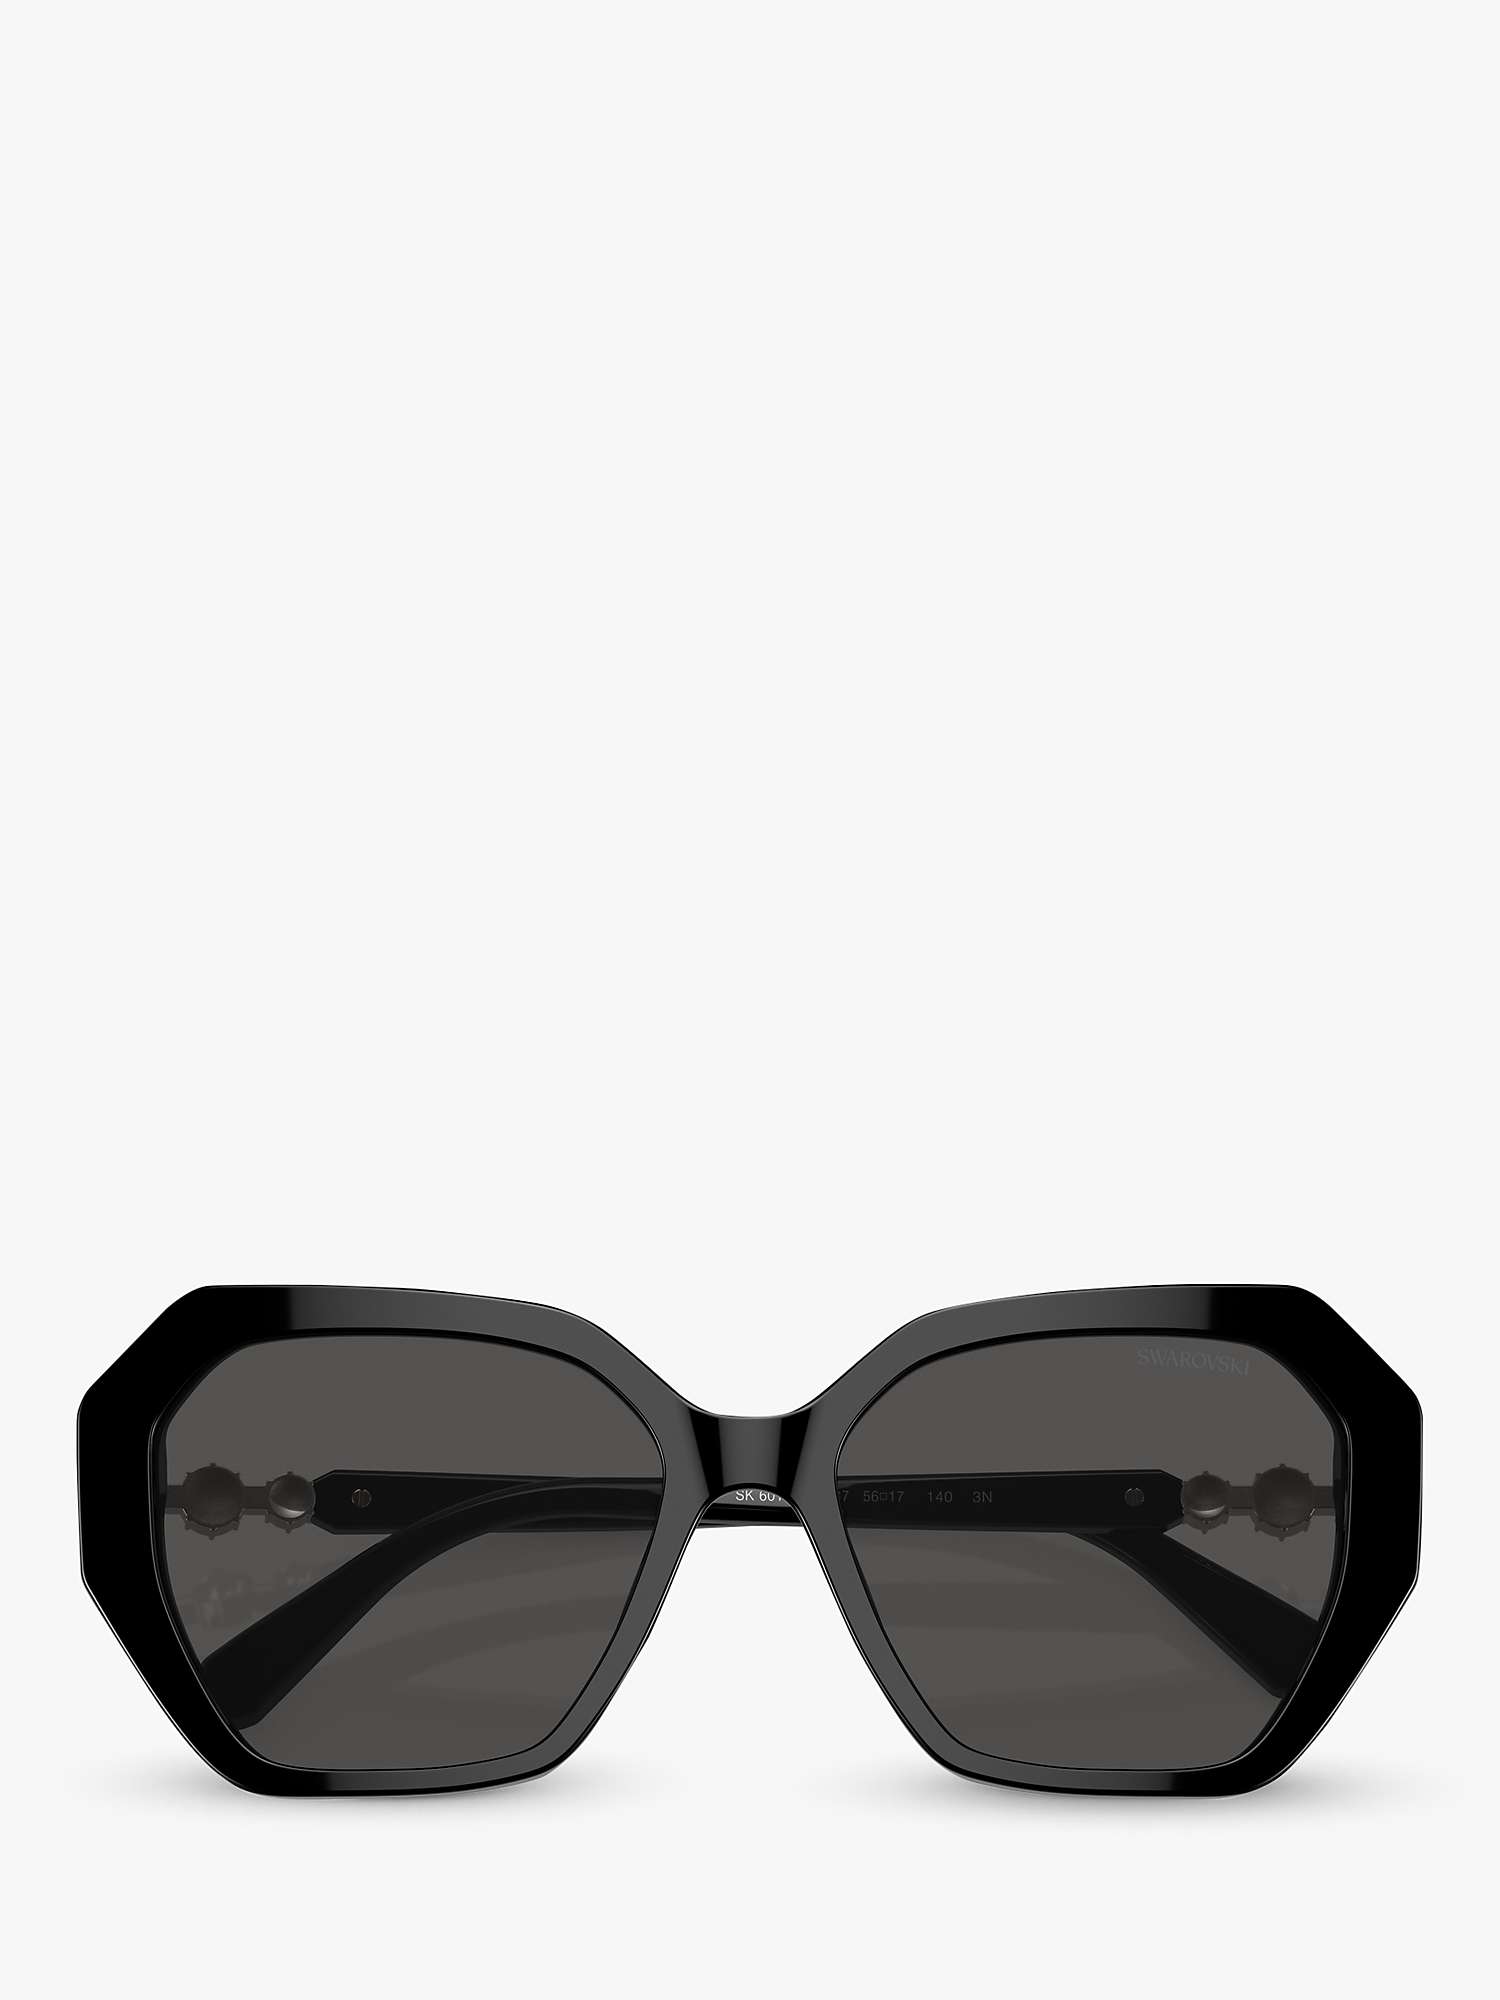 Buy Swarovski SK6017 Women's Irregular Sunglasses, Black/Grey Online at johnlewis.com